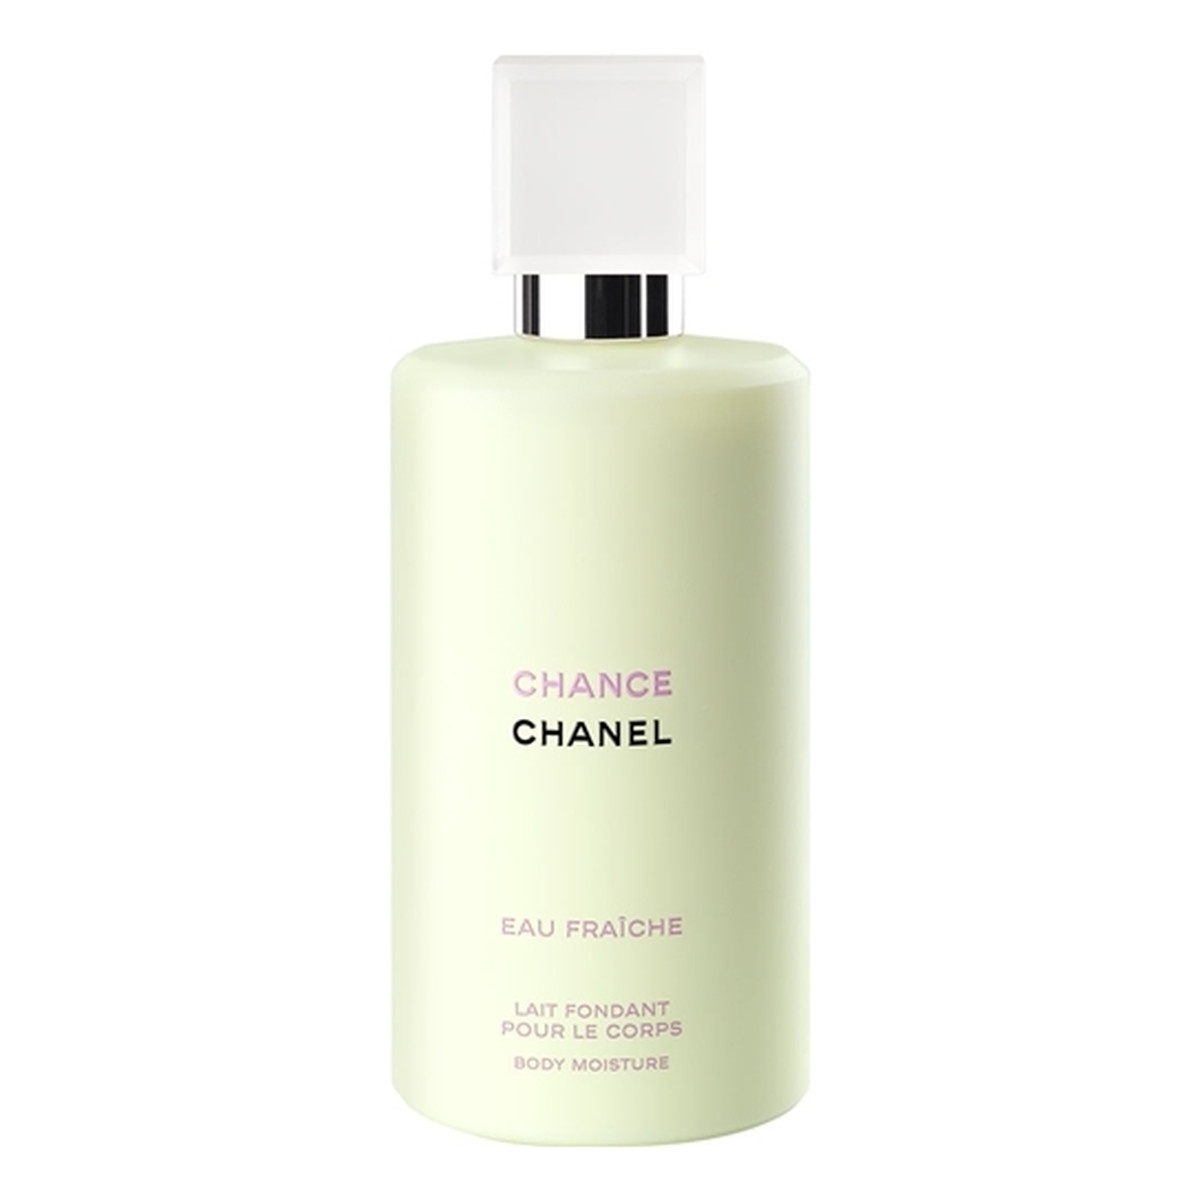 Chanel Chance Eau Fraiche mleczko do ciała 200ml